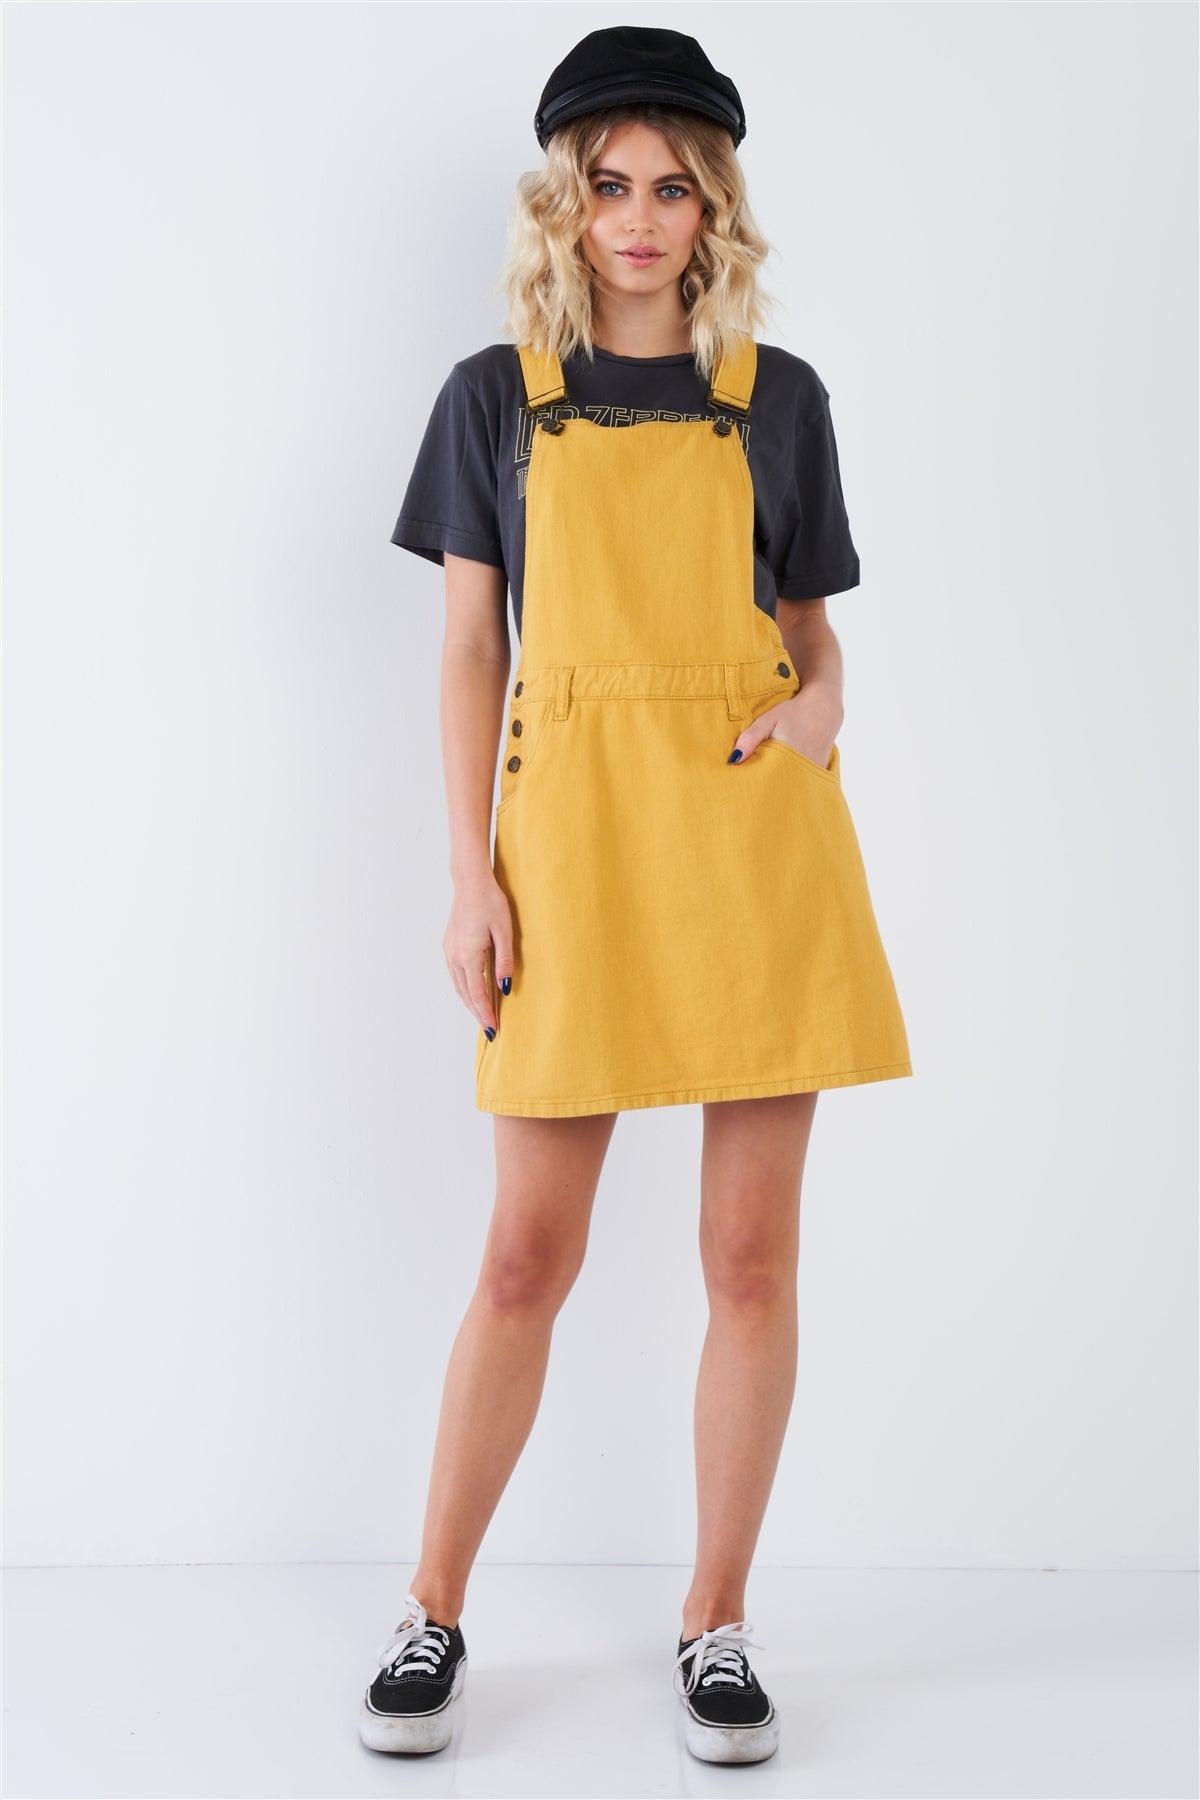 Honey Yellow Cotton Overall Dress  /3-2-1